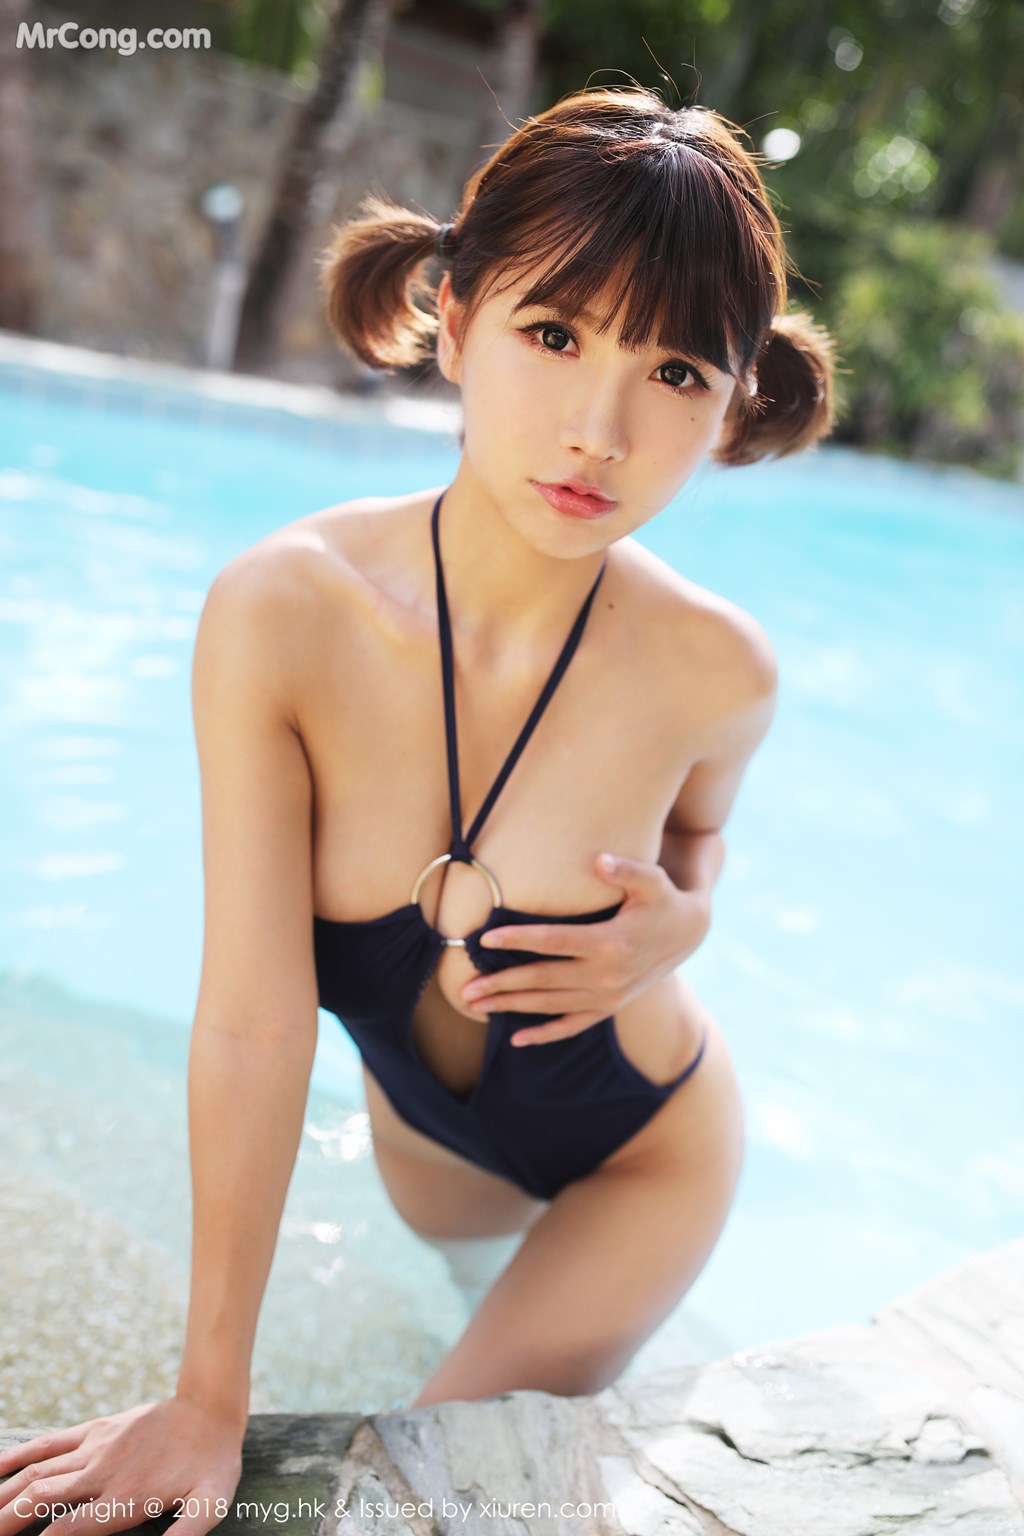 MyGirl Vol.283: Sunny Model (晓 茜) (51 photos) photo 1-6